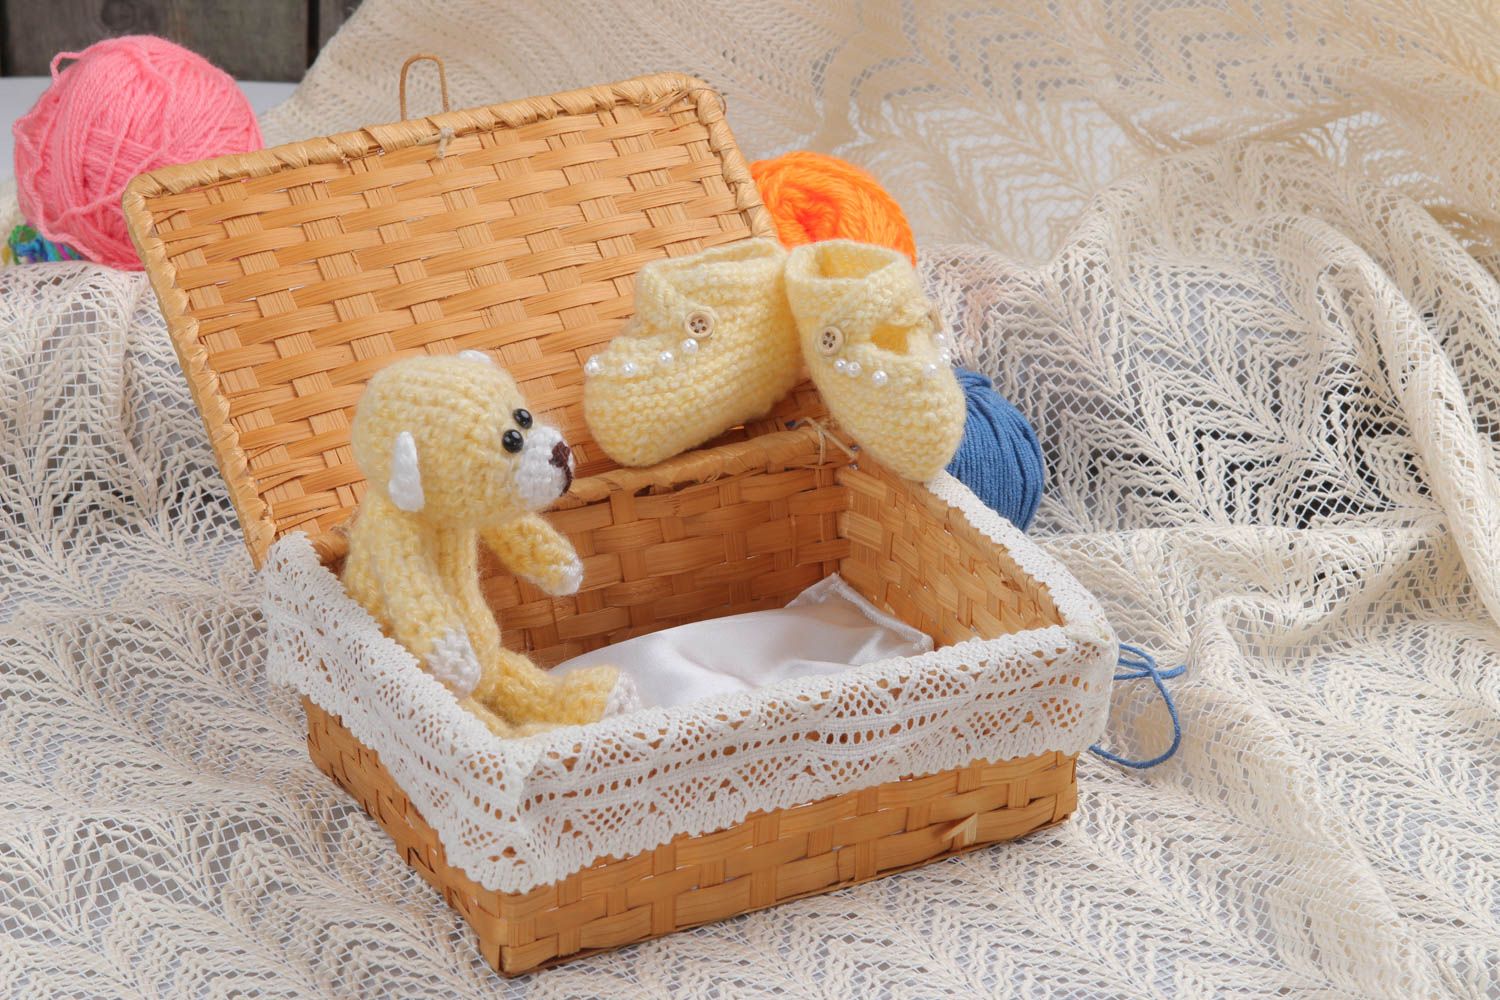 Unusual handmade crochet toy baby booties crochet ideas handmade gifts photo 1